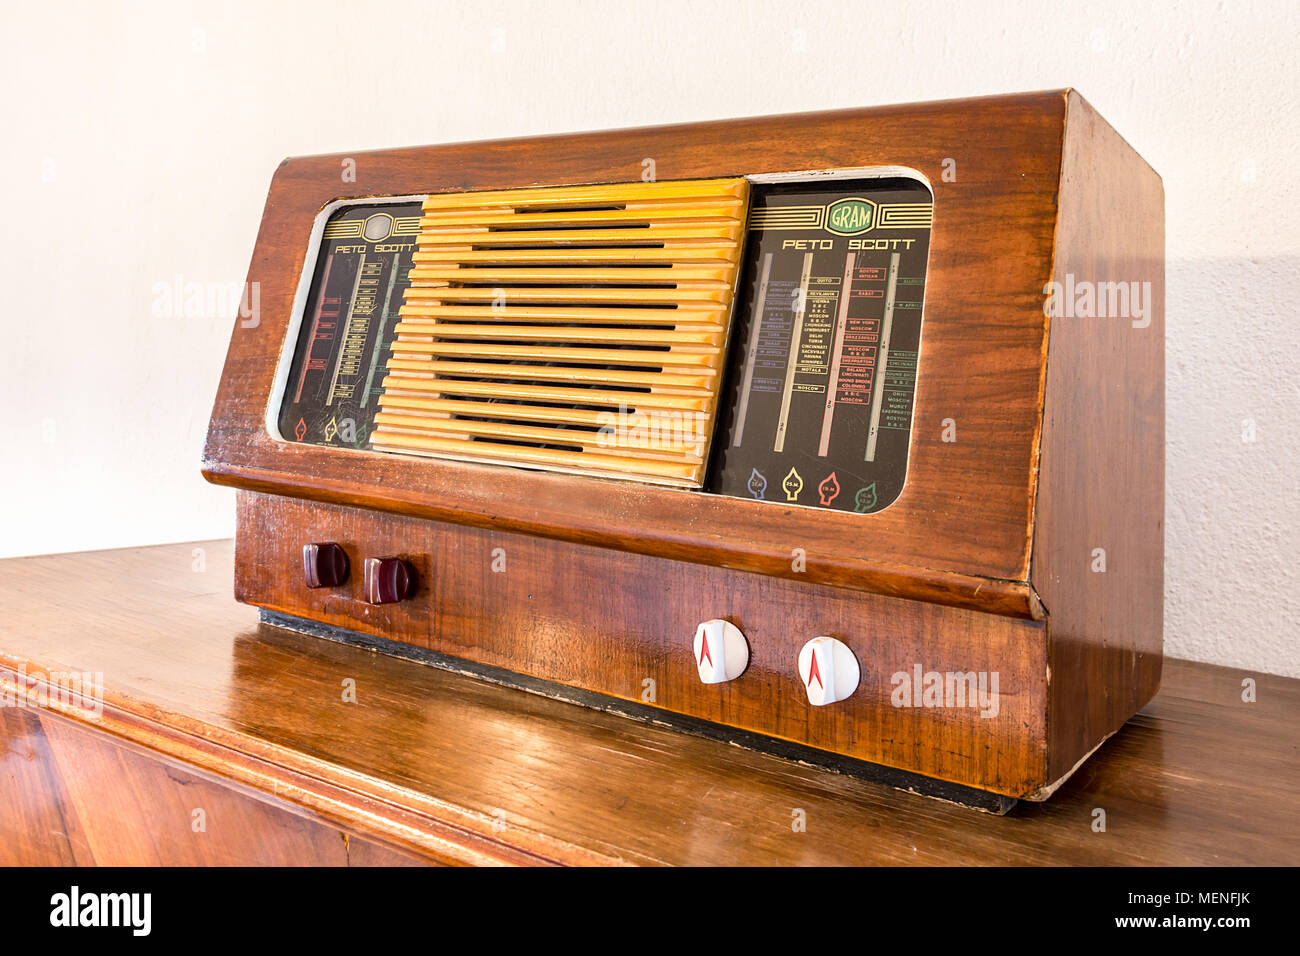 https://c8.alamy.com/comp/MENFJK/larissa-greece-april-8th-2018-wooden-vintage-peto-scott-radio-feature-with-short-wave-and-4-knobs-MENFJK.jpg